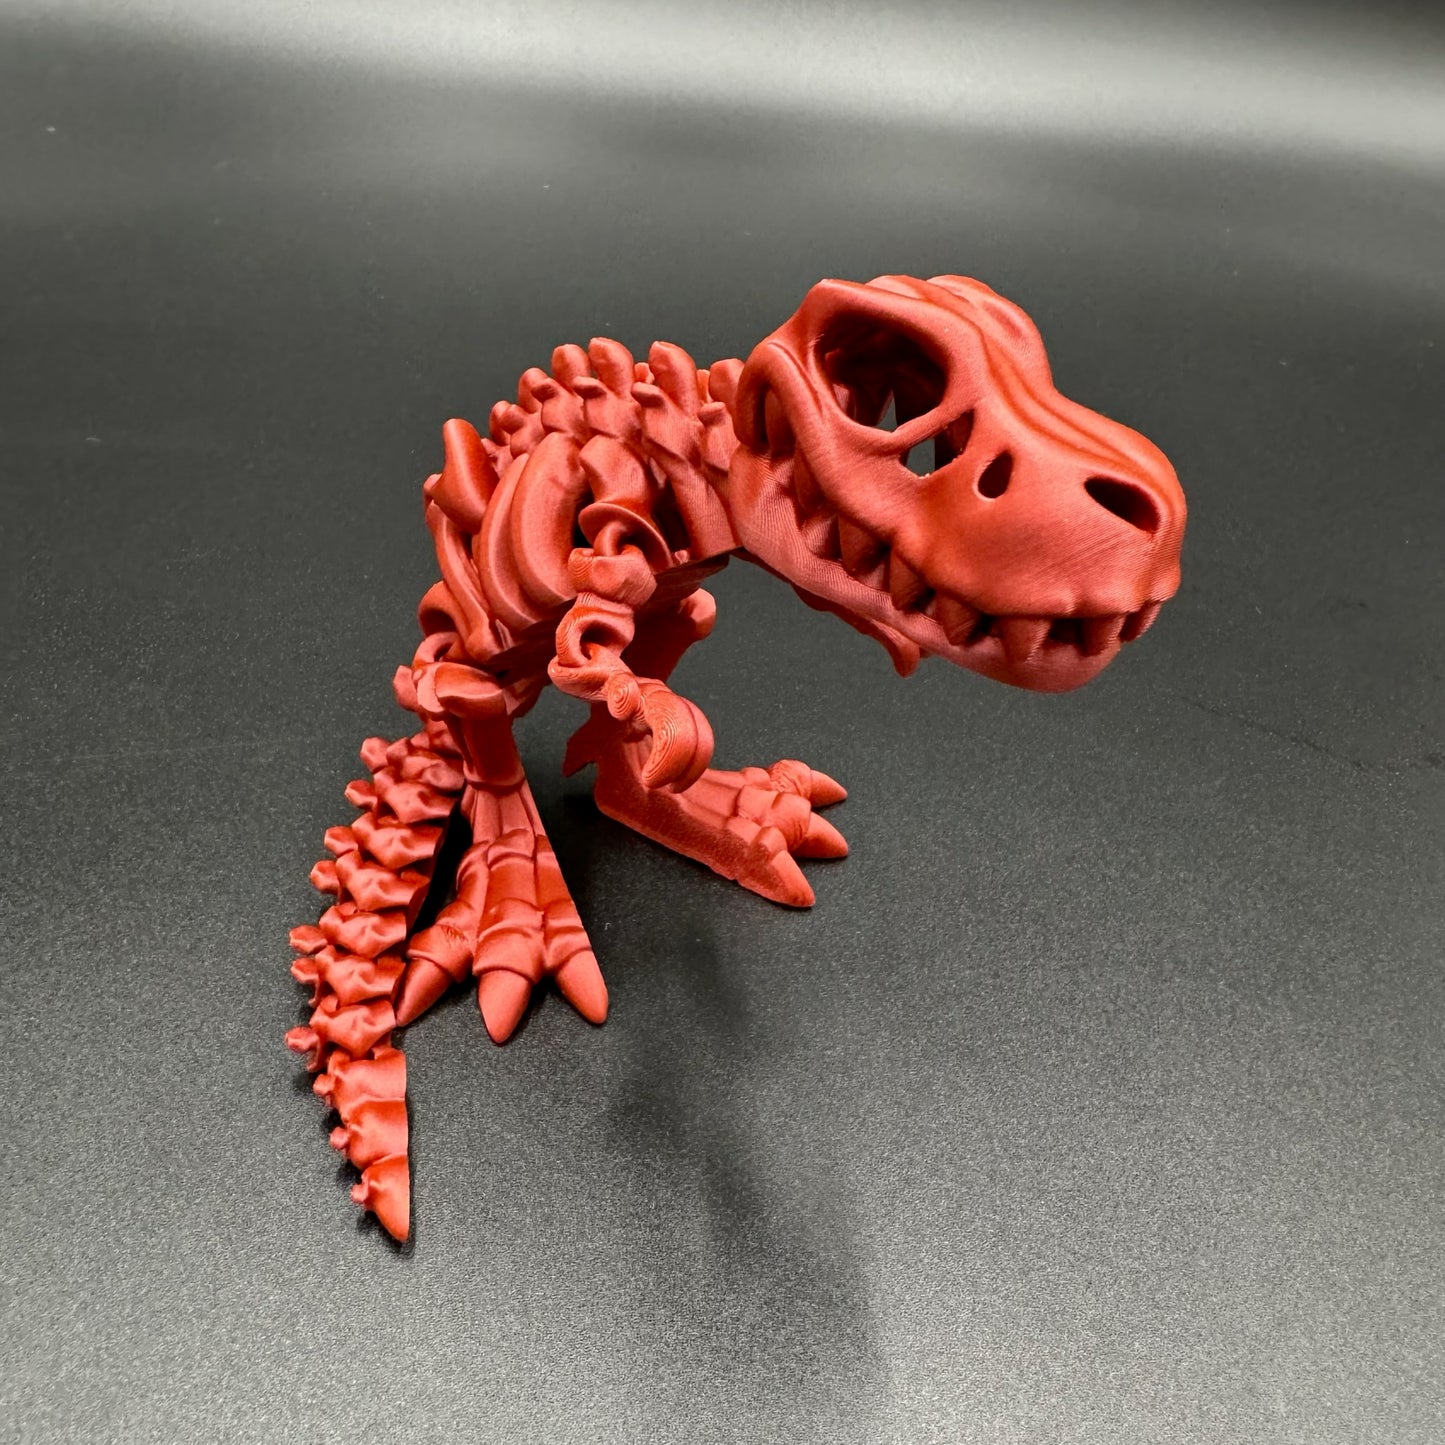 3D Printed Bone Rex Dinosaur Articulating Figurine